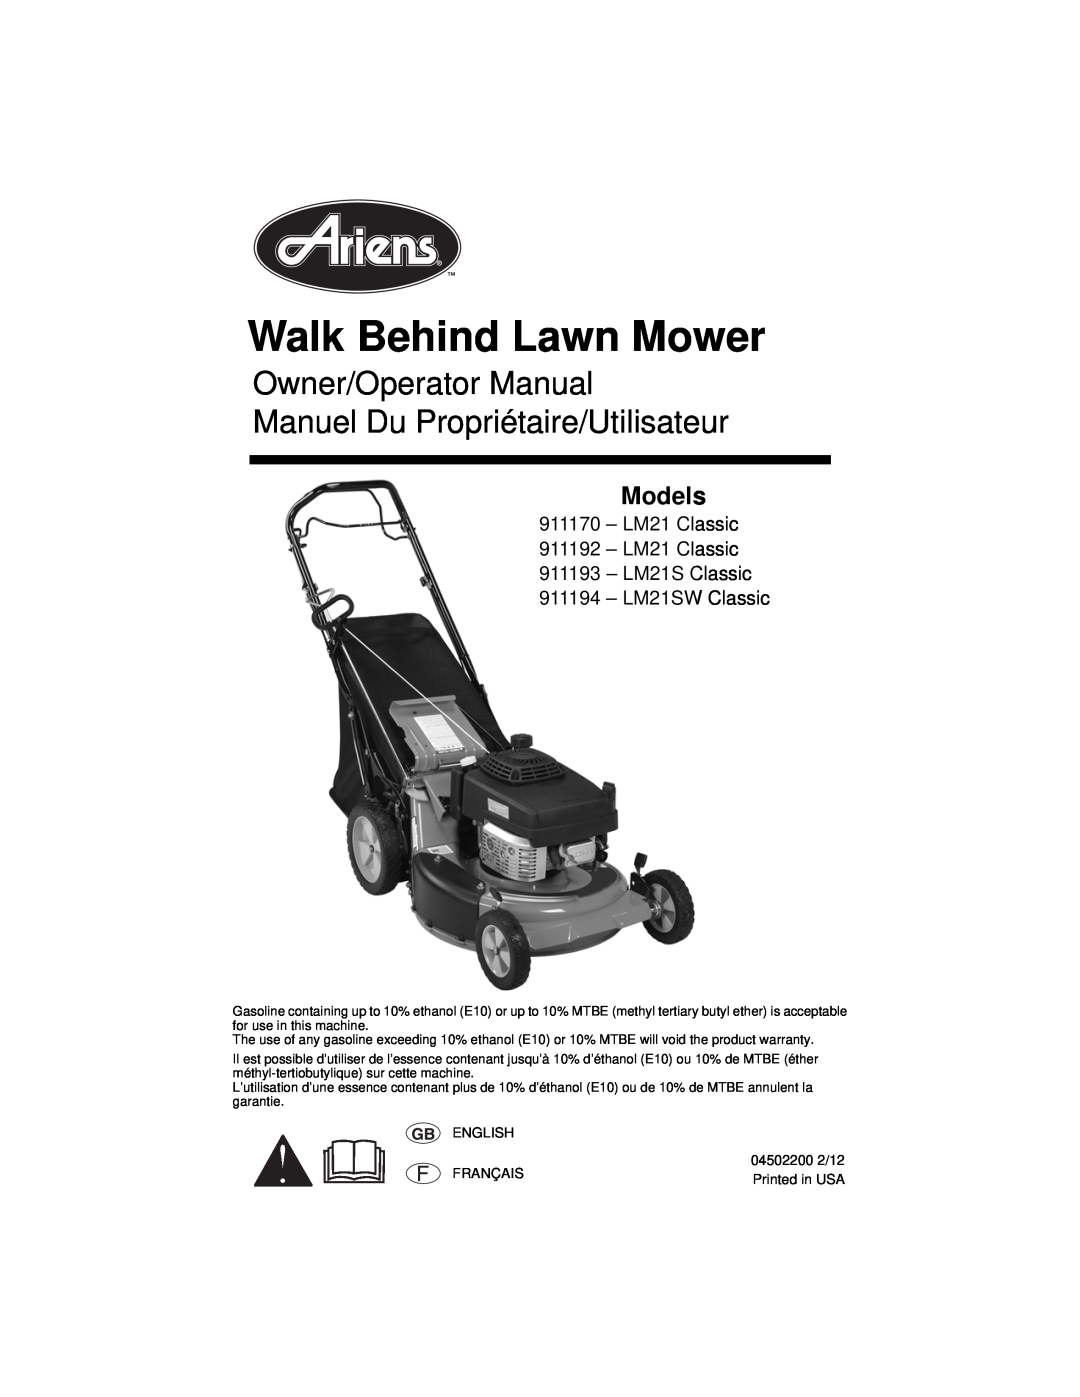 Ariens 911194 warranty Walk Behind Lawn Mower, Owner/Operator Manual Manuel Du Propriétaire/Utilisateur, Models 